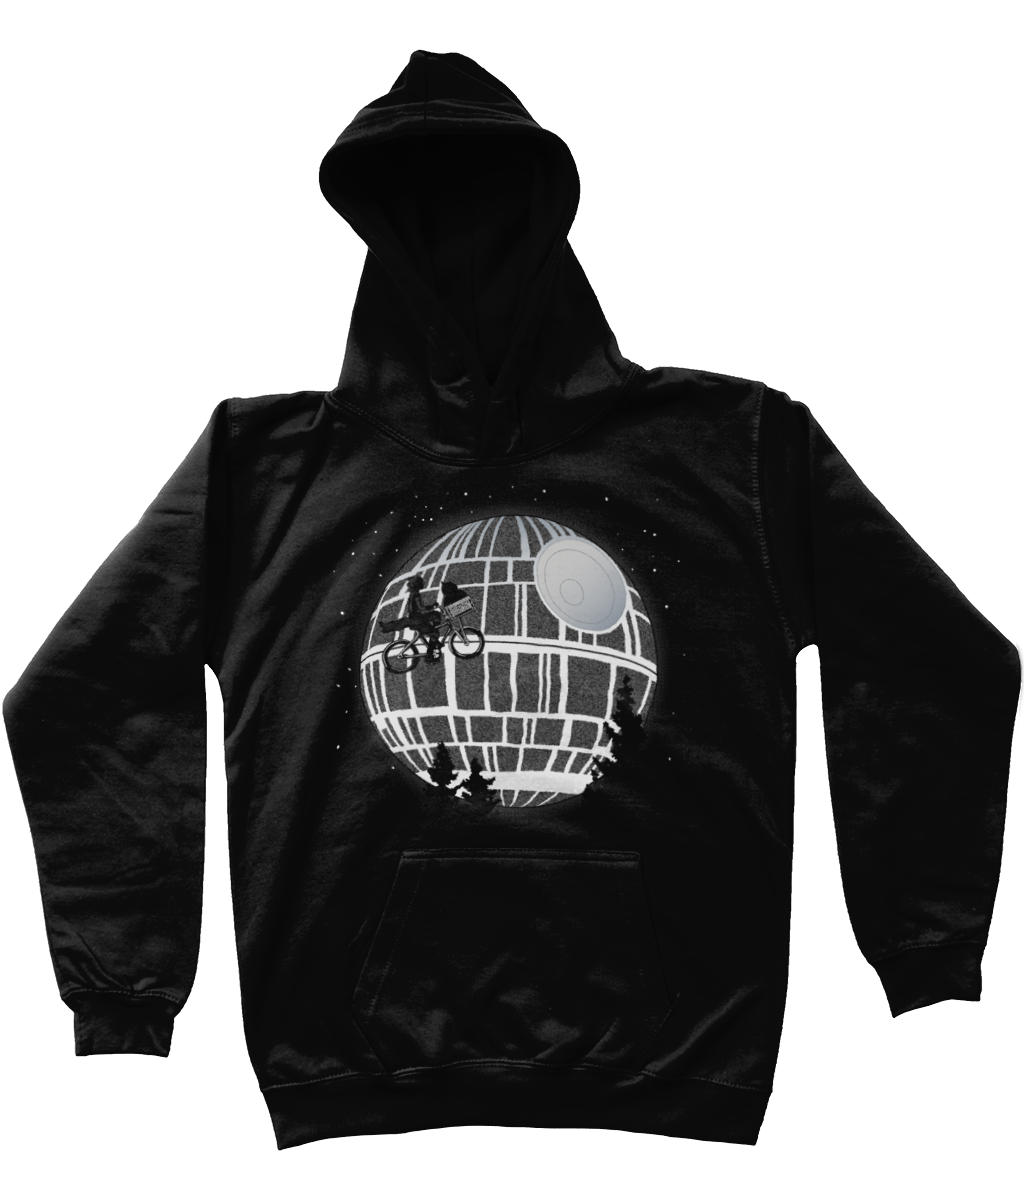 star wars death star hoodie